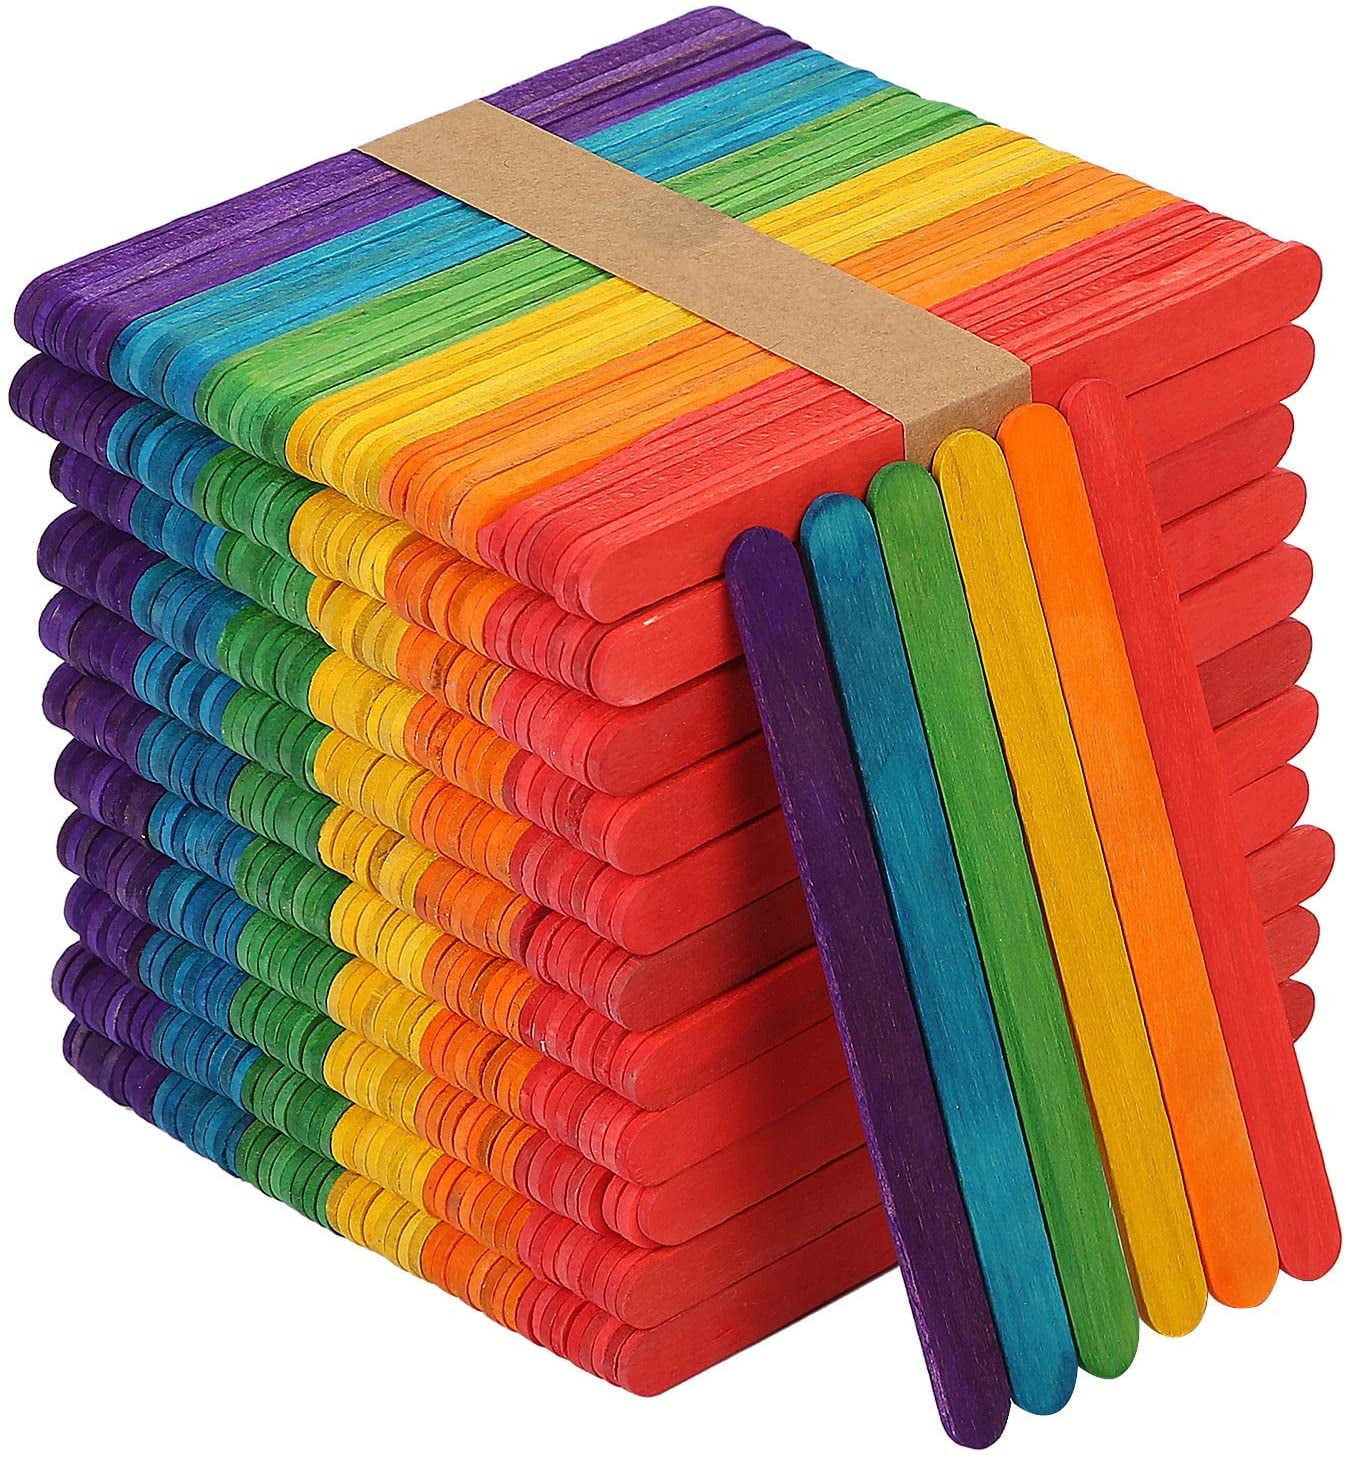 1800 Pcs Colored Popsicle Sticks, 4.5 inch, Rainbow Colored Wood Craft Sticks, Popsicle Sticks for Crafts, Art Supplies, DIY Craft Creative Designs